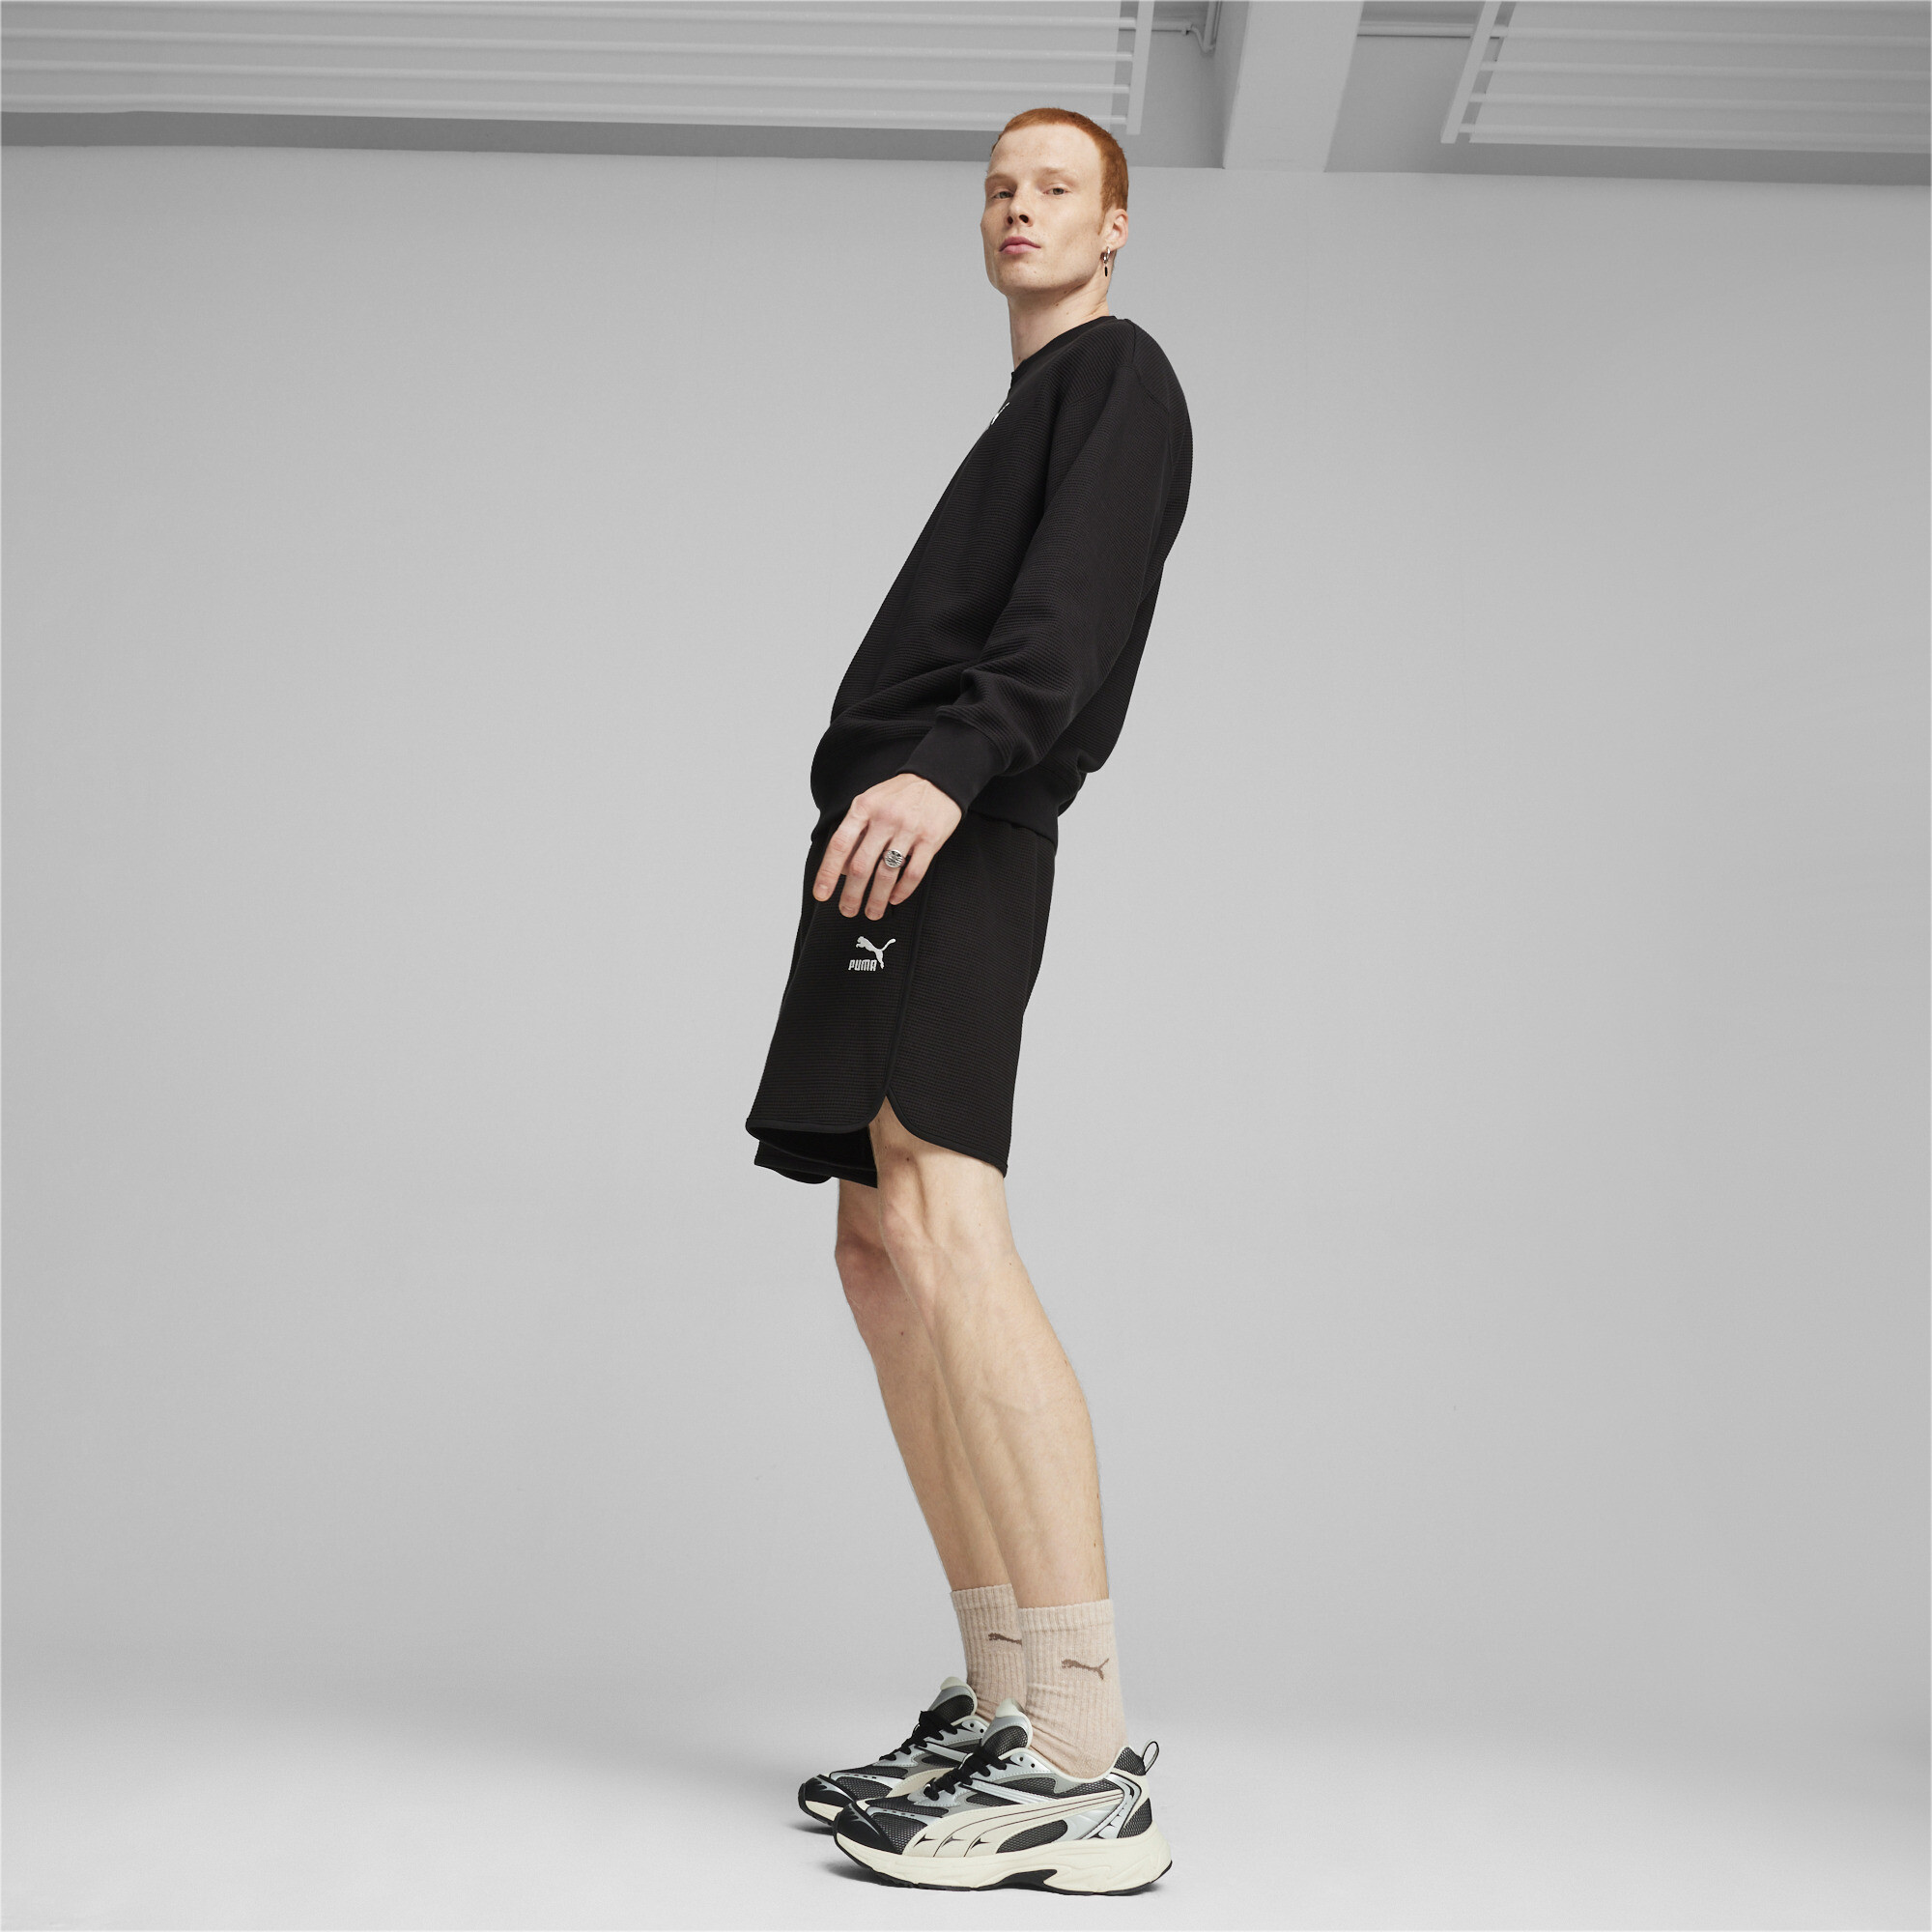 Men's Puma CLASSICS's Waffle Shorts, Black, Size S, Clothing